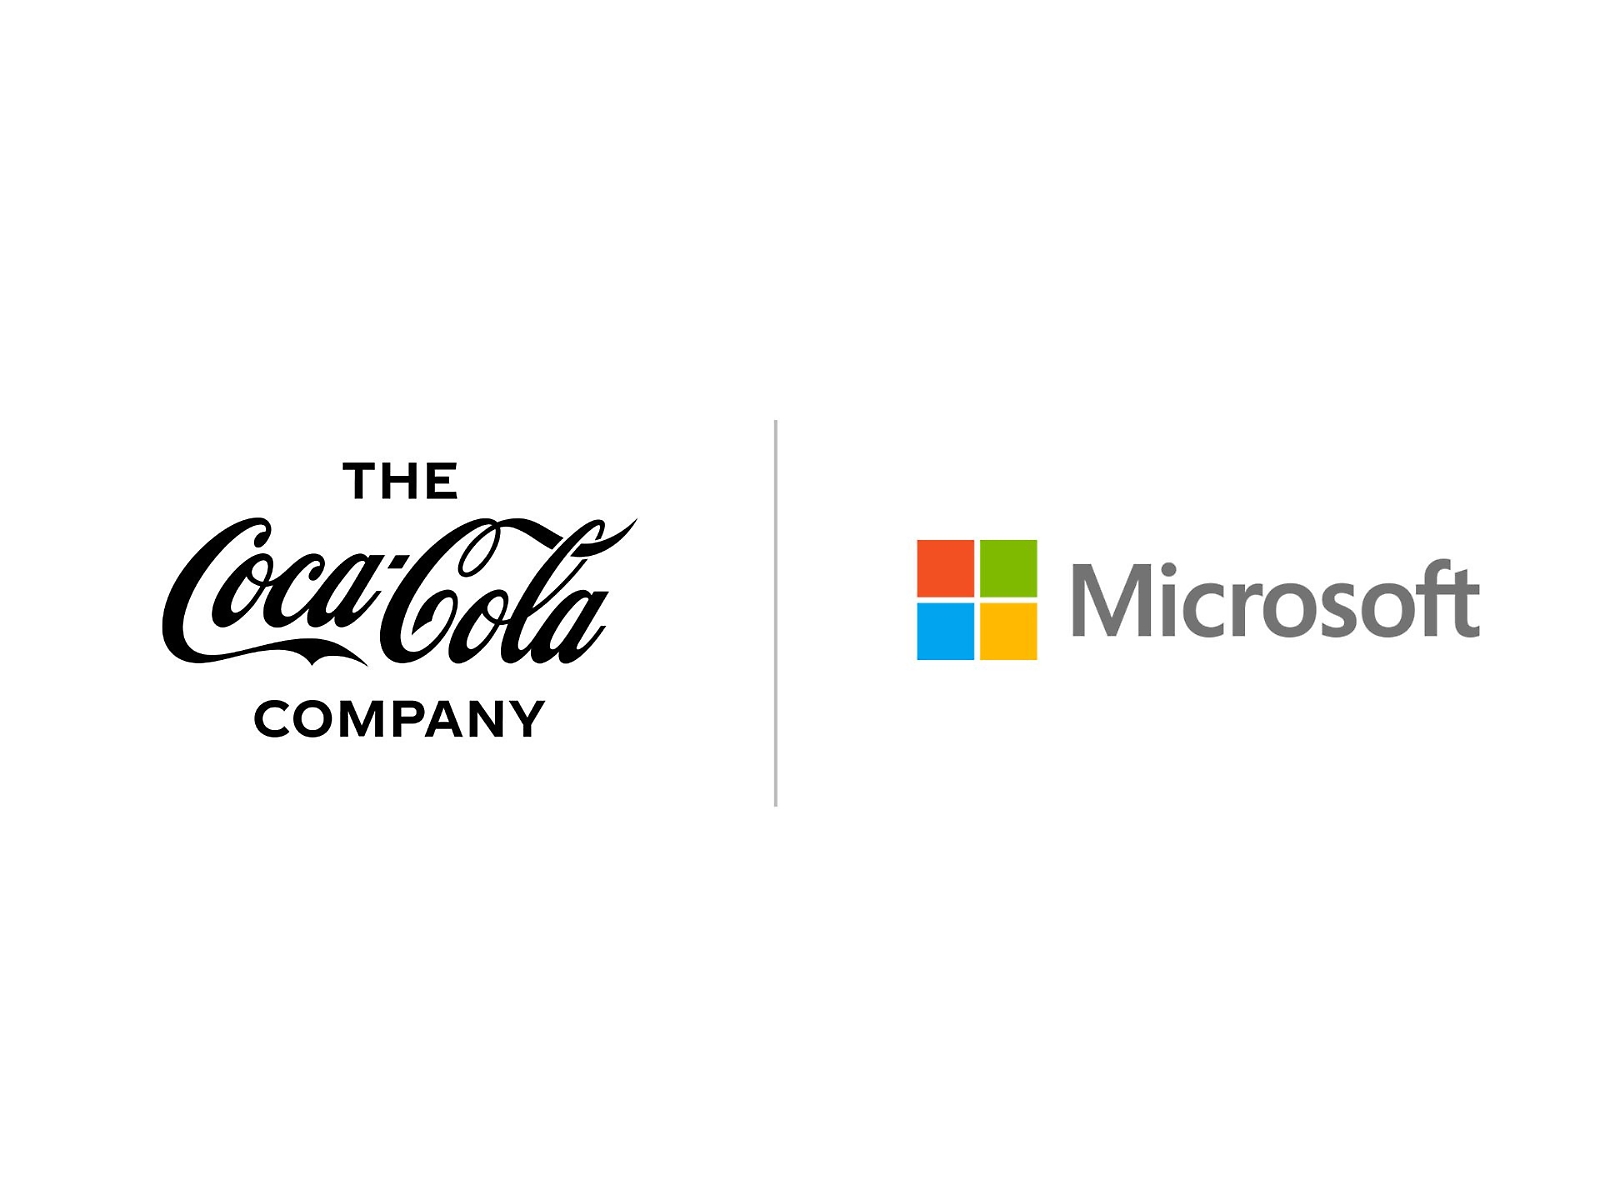 Logo firmy Coca-Cola